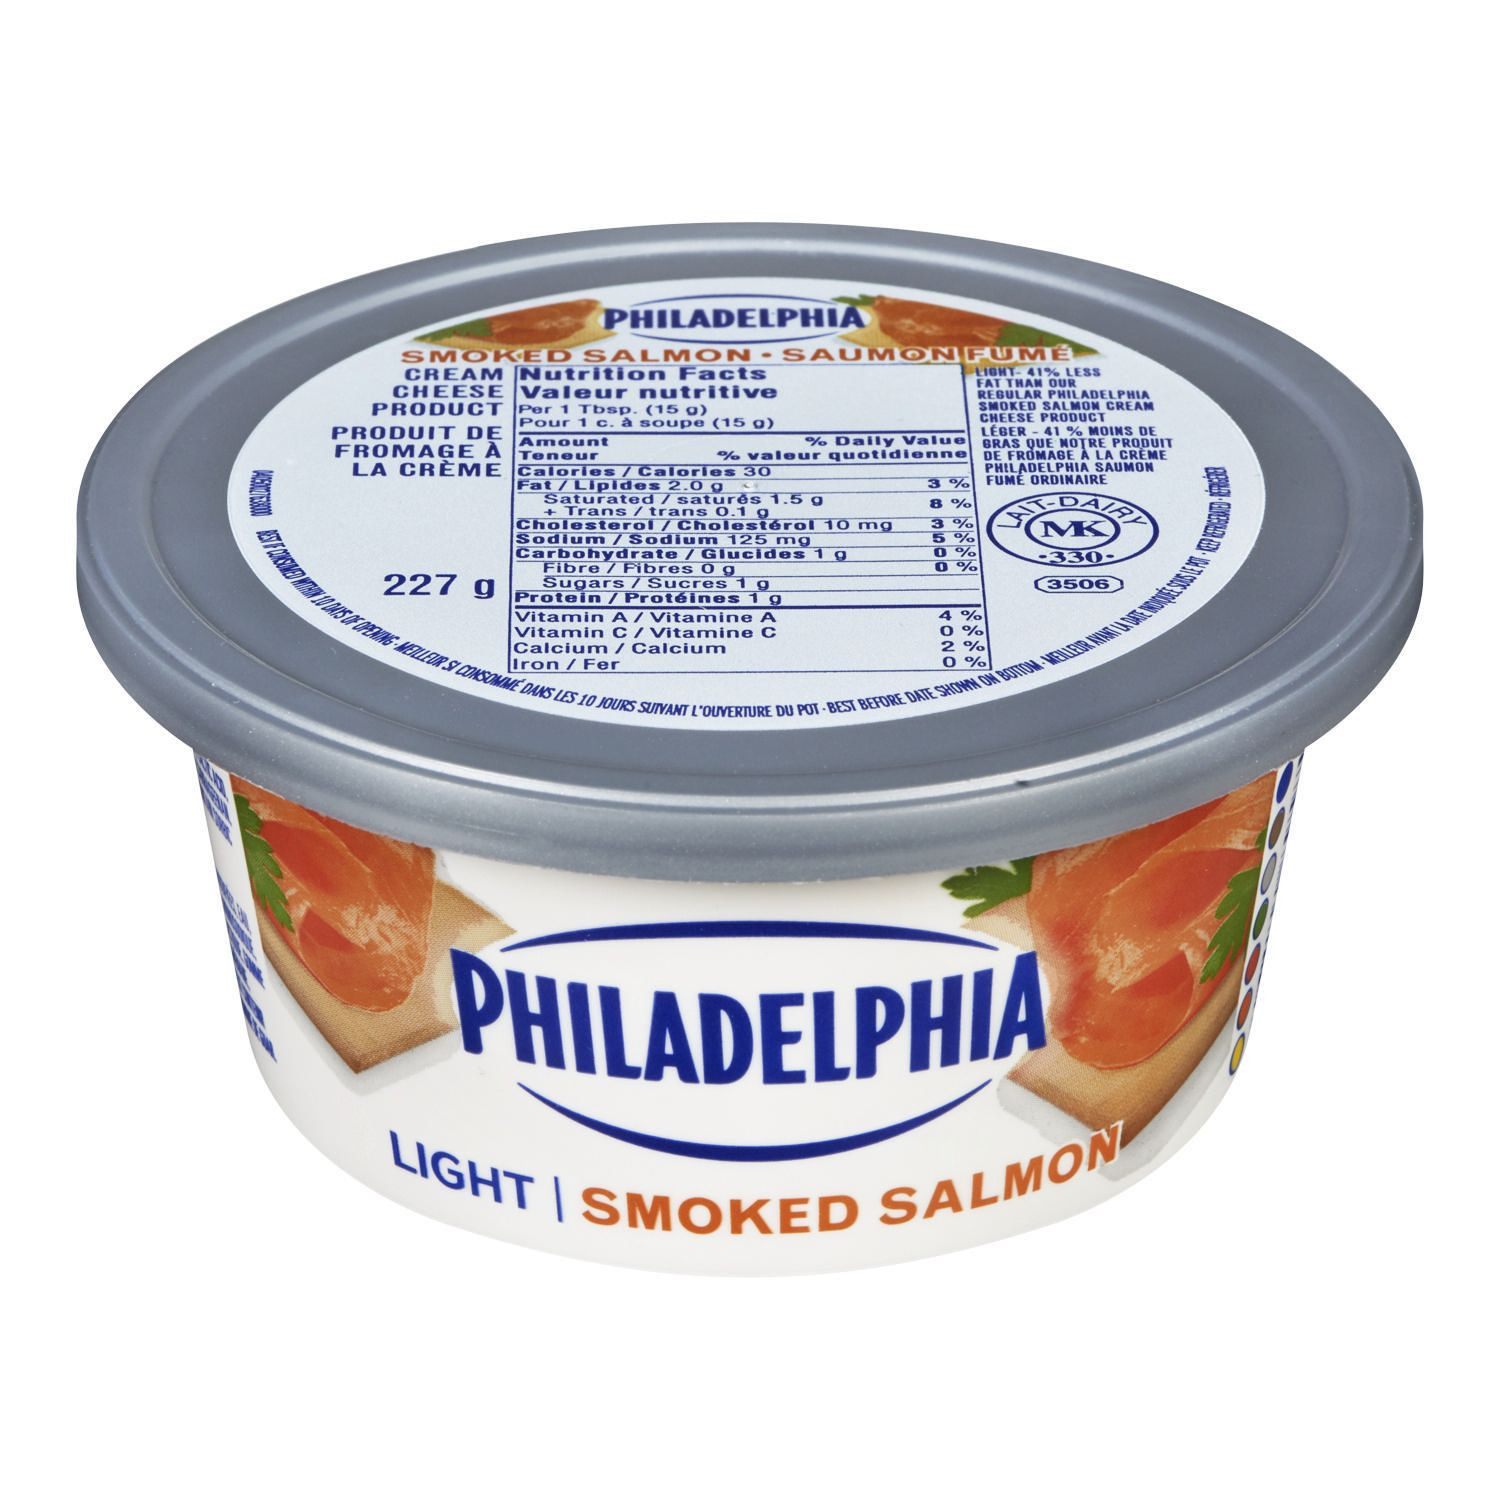 Smoked Salmon Walmart
 Philadelphia Smoked Salmon Light Cream Cheese